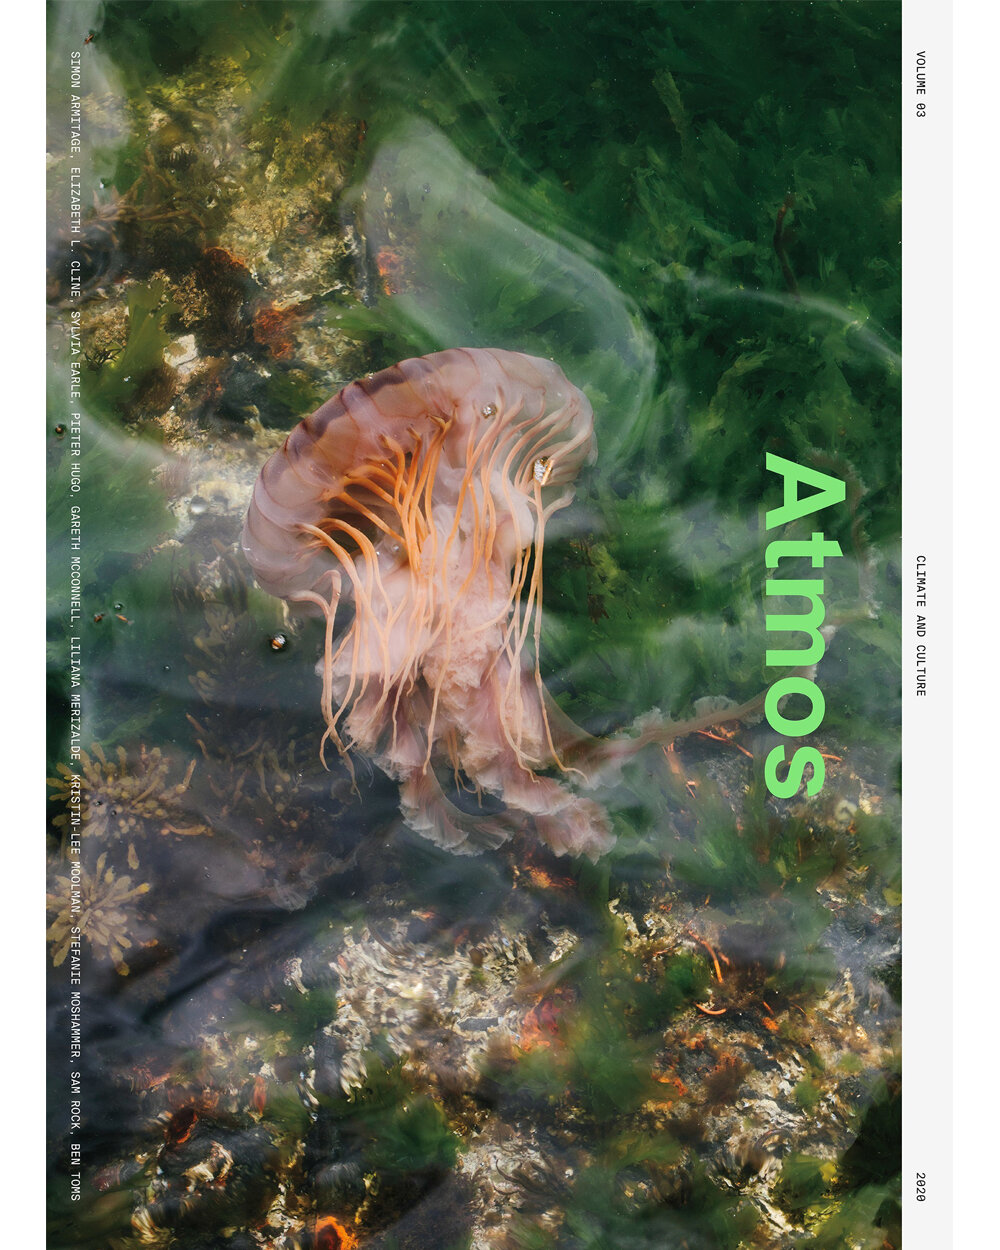 atmos-magazine-jelly-fish.jpg